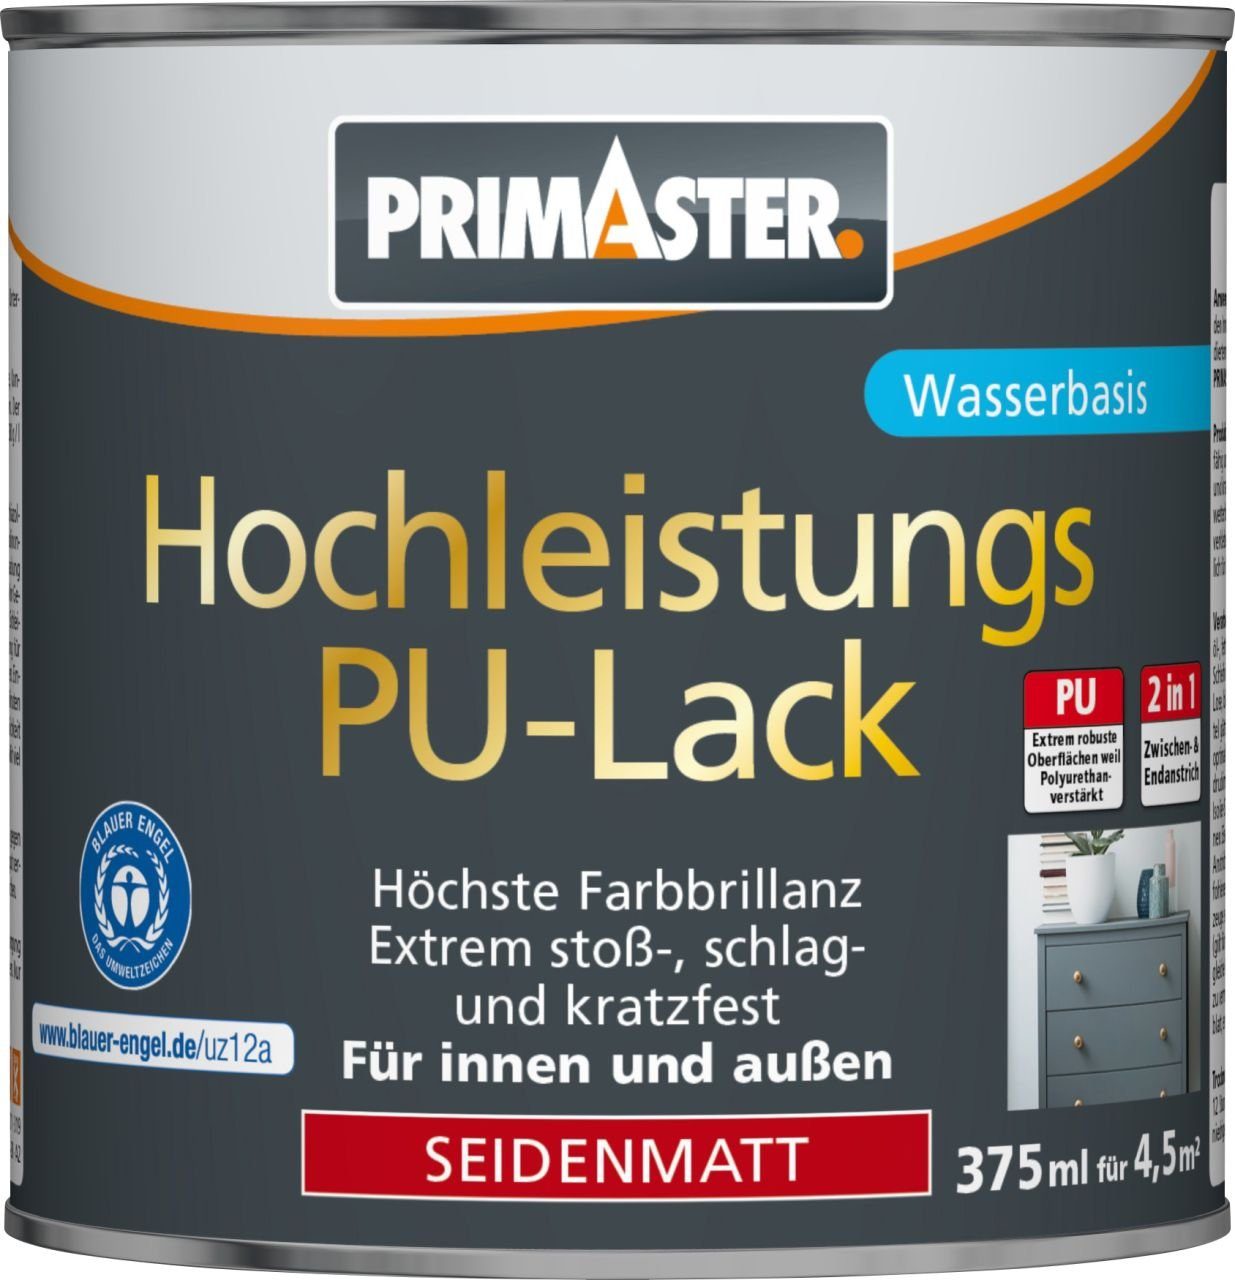 Primaster ml RAL Hochleistungs-PU-Lack 375 Primaster 8017 Acryl-Buntlack